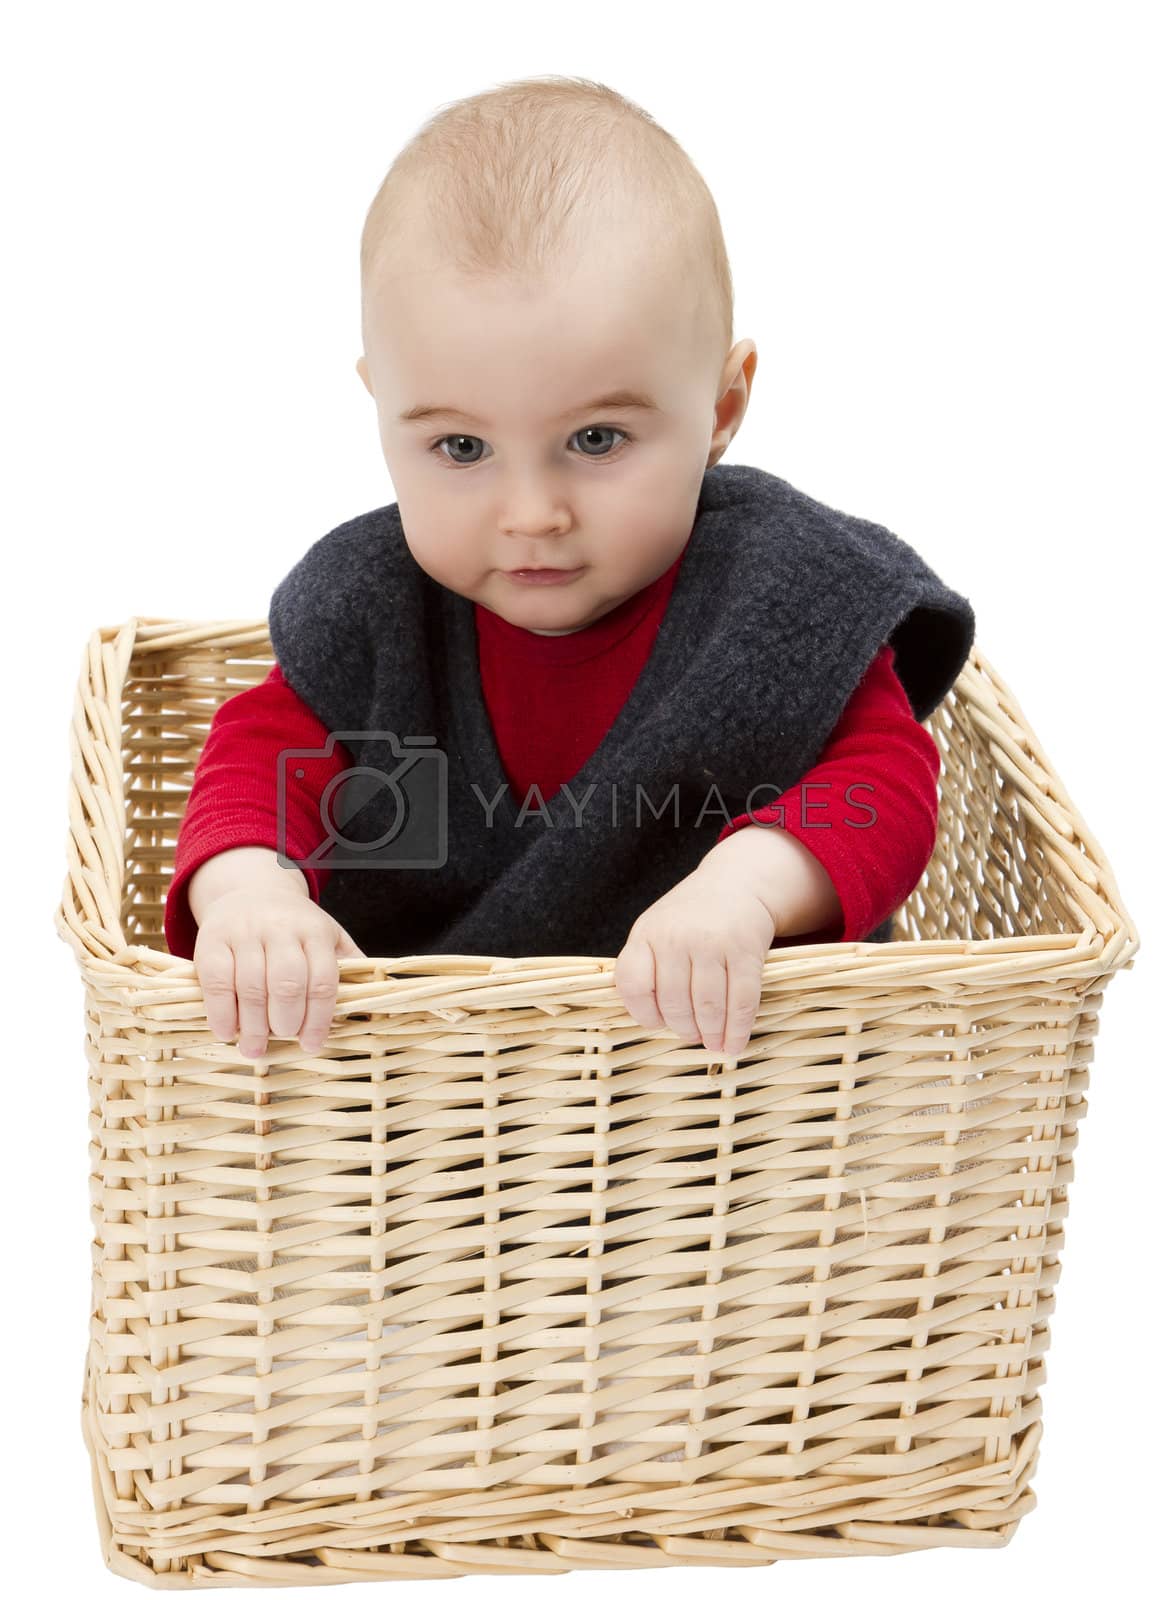 Royalty free image of toddler in wickerbasket by gewoldi